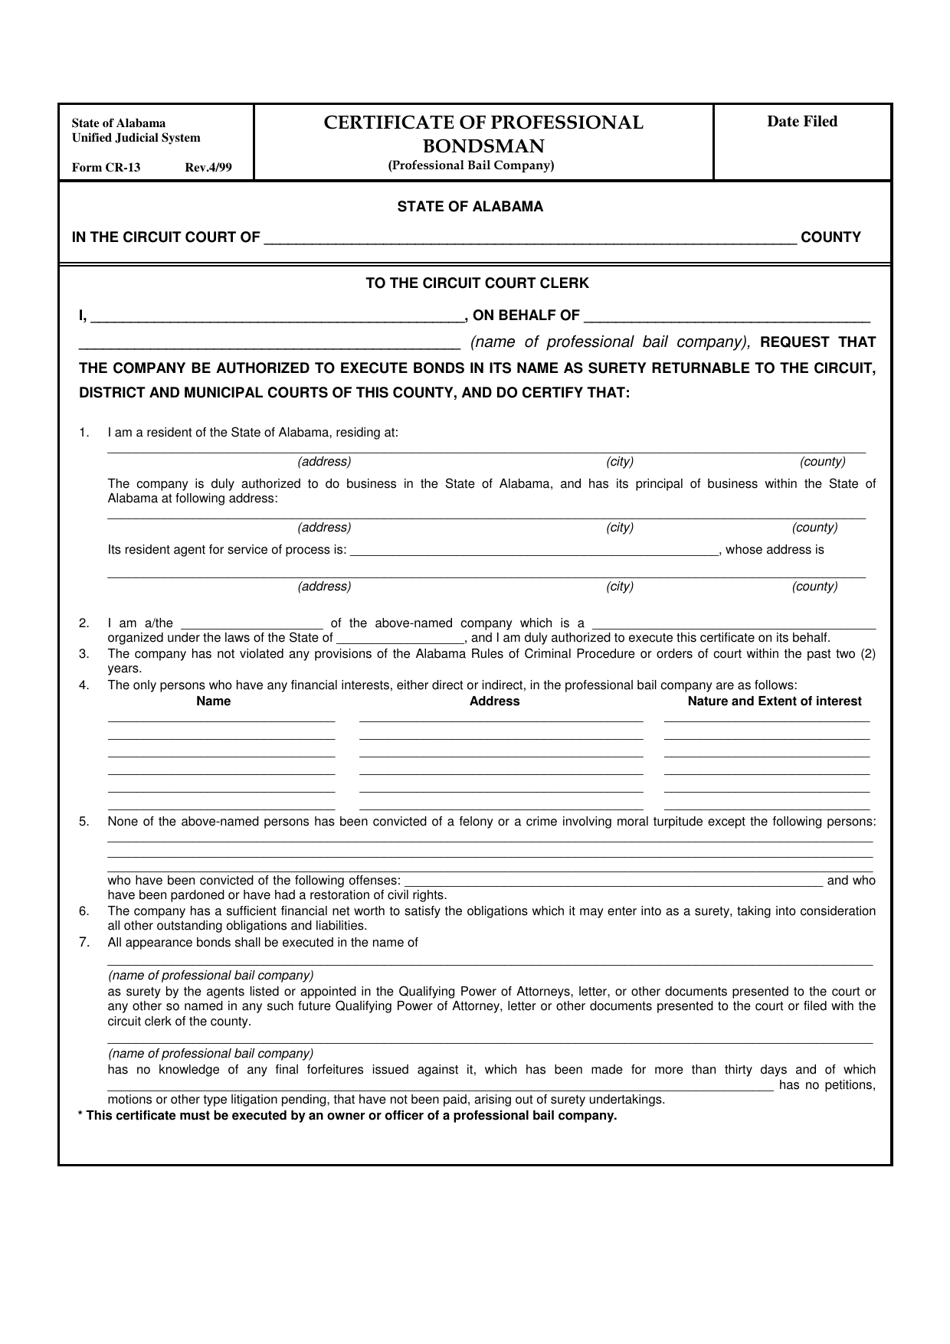 Form CR-13 Certificate of Professional Bondsman (Professional Bail Company) - Alabama, Page 1